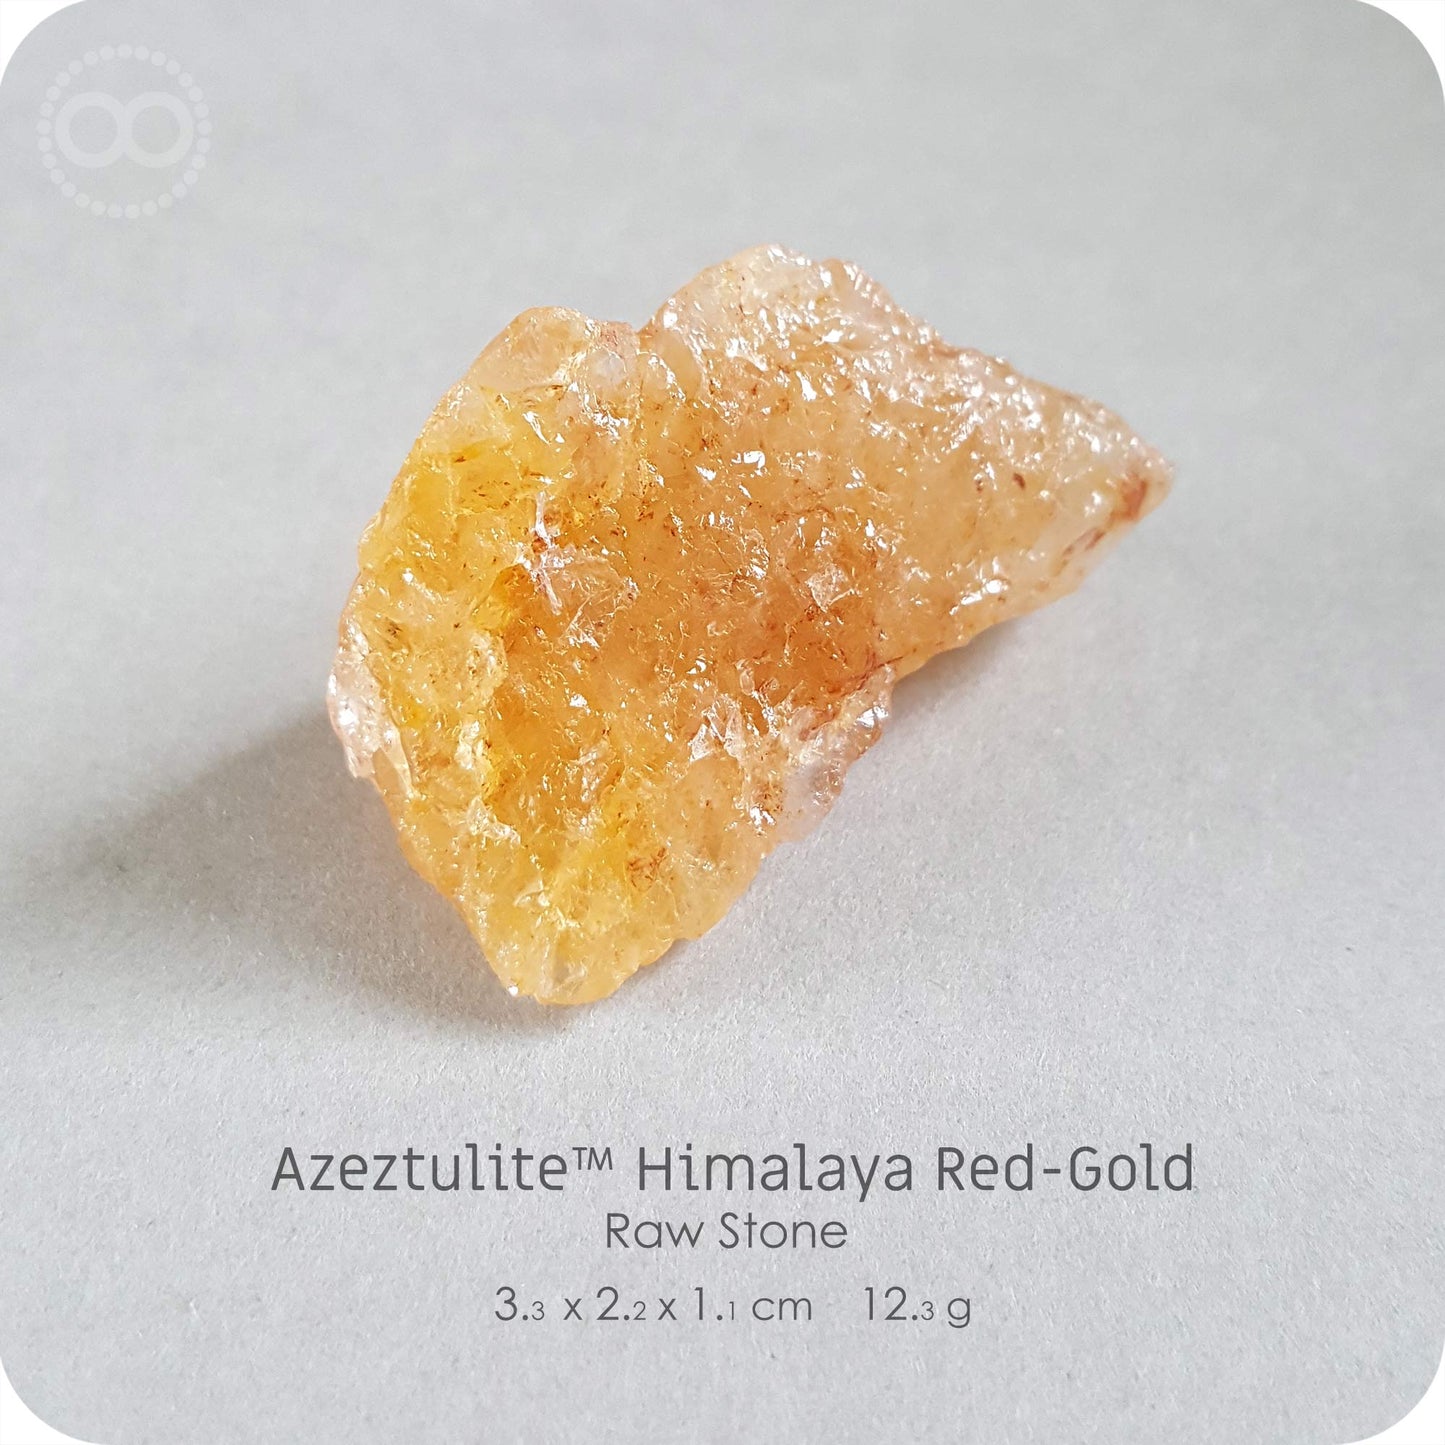 Azeztulite™ Himalaya Red-Gold 阿賽斯特萊石 Silver Necklace - H204